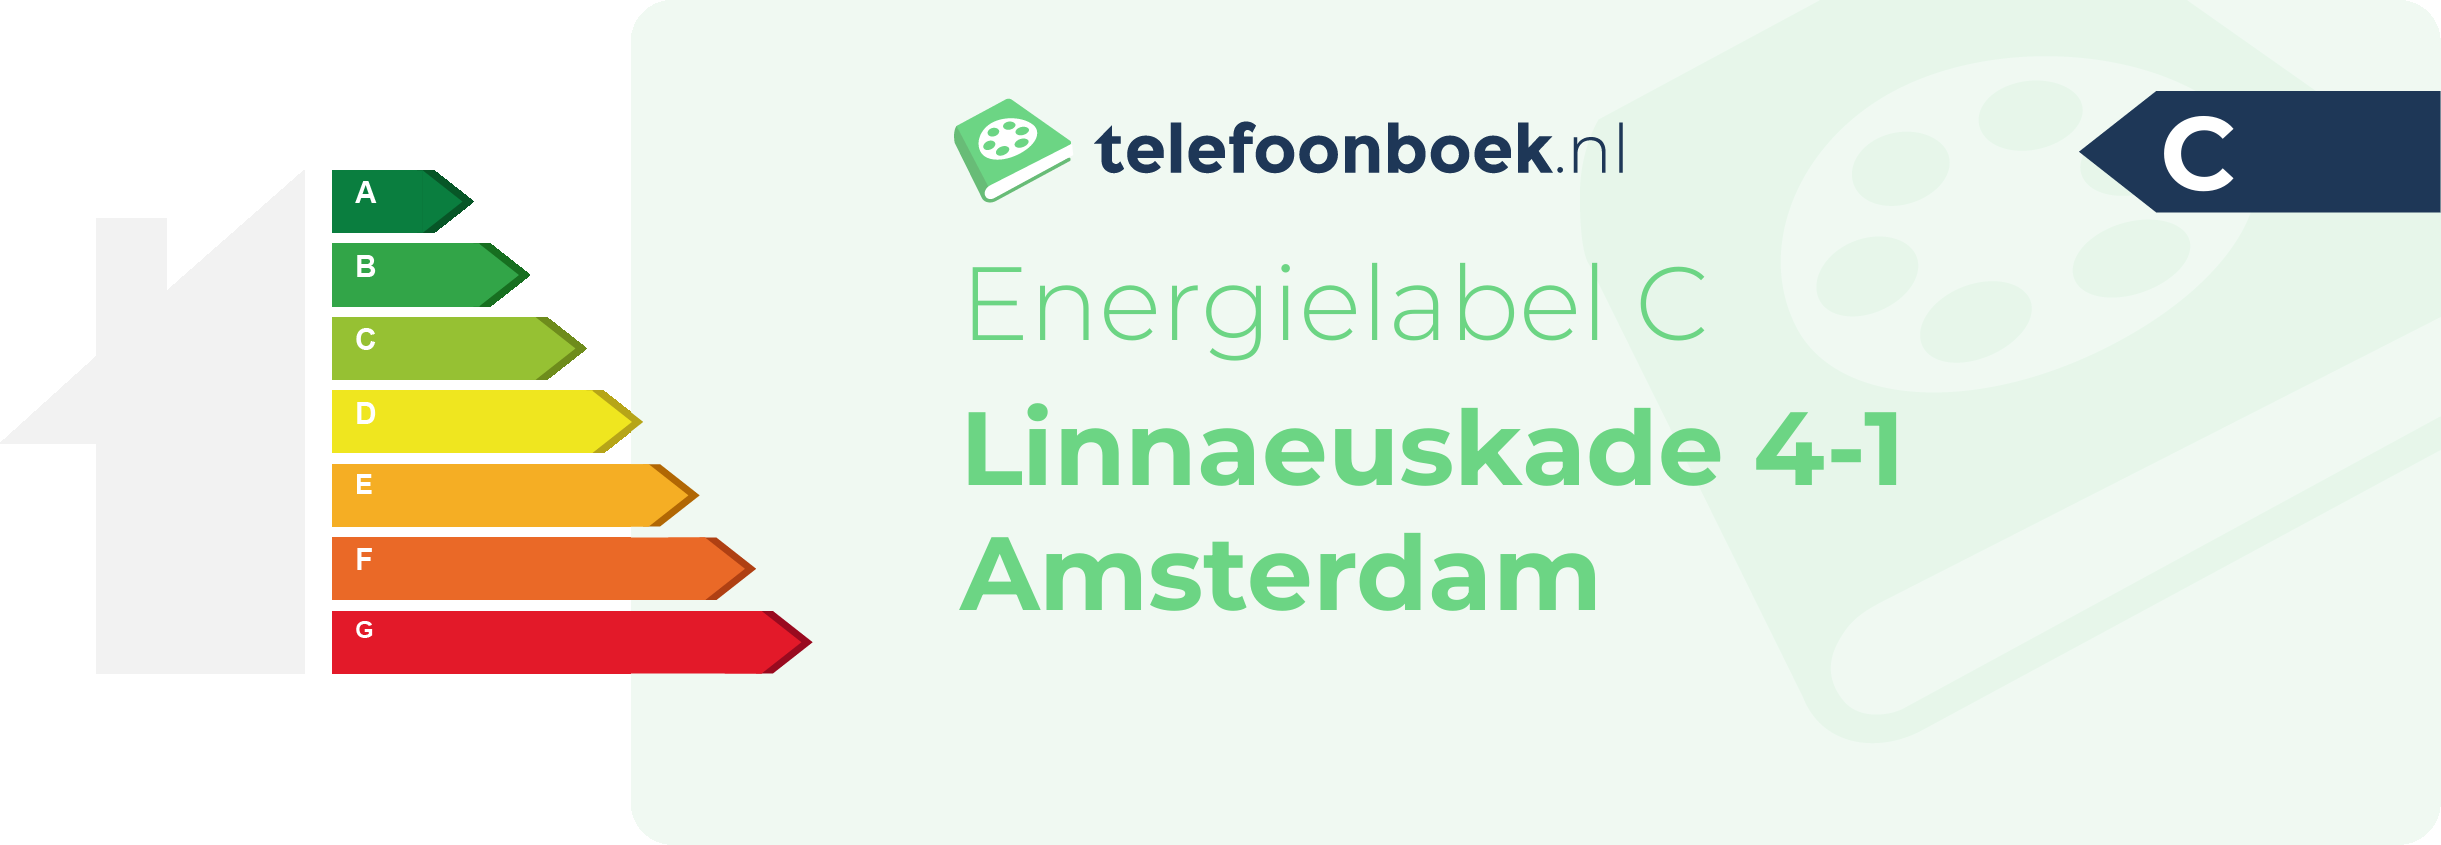 Energielabel Linnaeuskade 4-1 Amsterdam